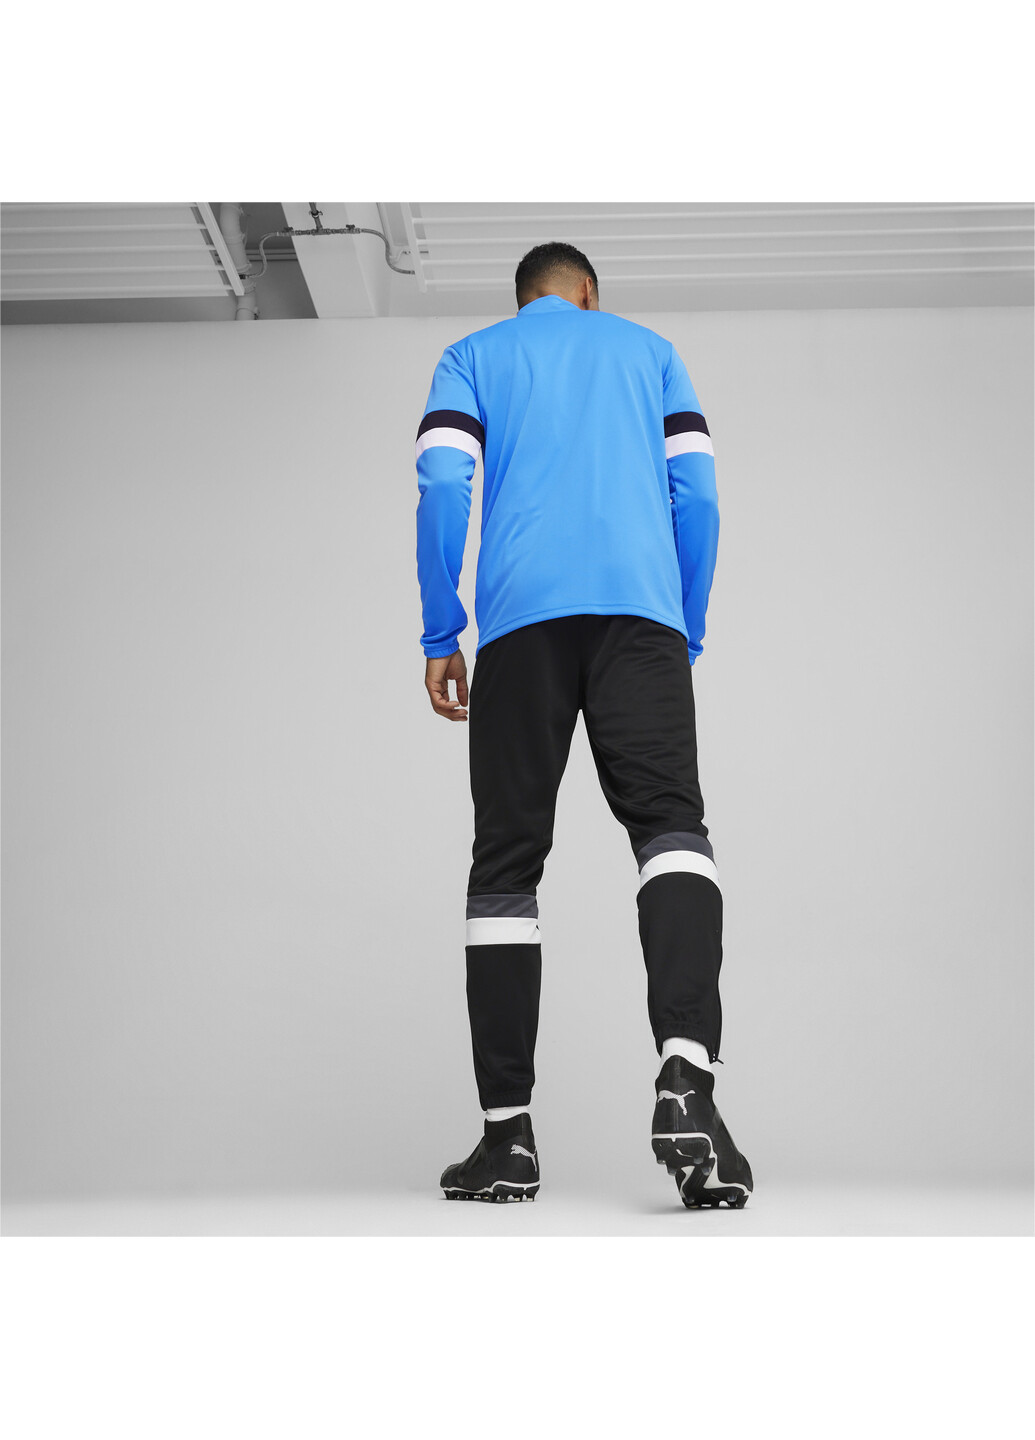 Спортивный костюм teamRISE Men's Football Tracksuit Puma (278611537)